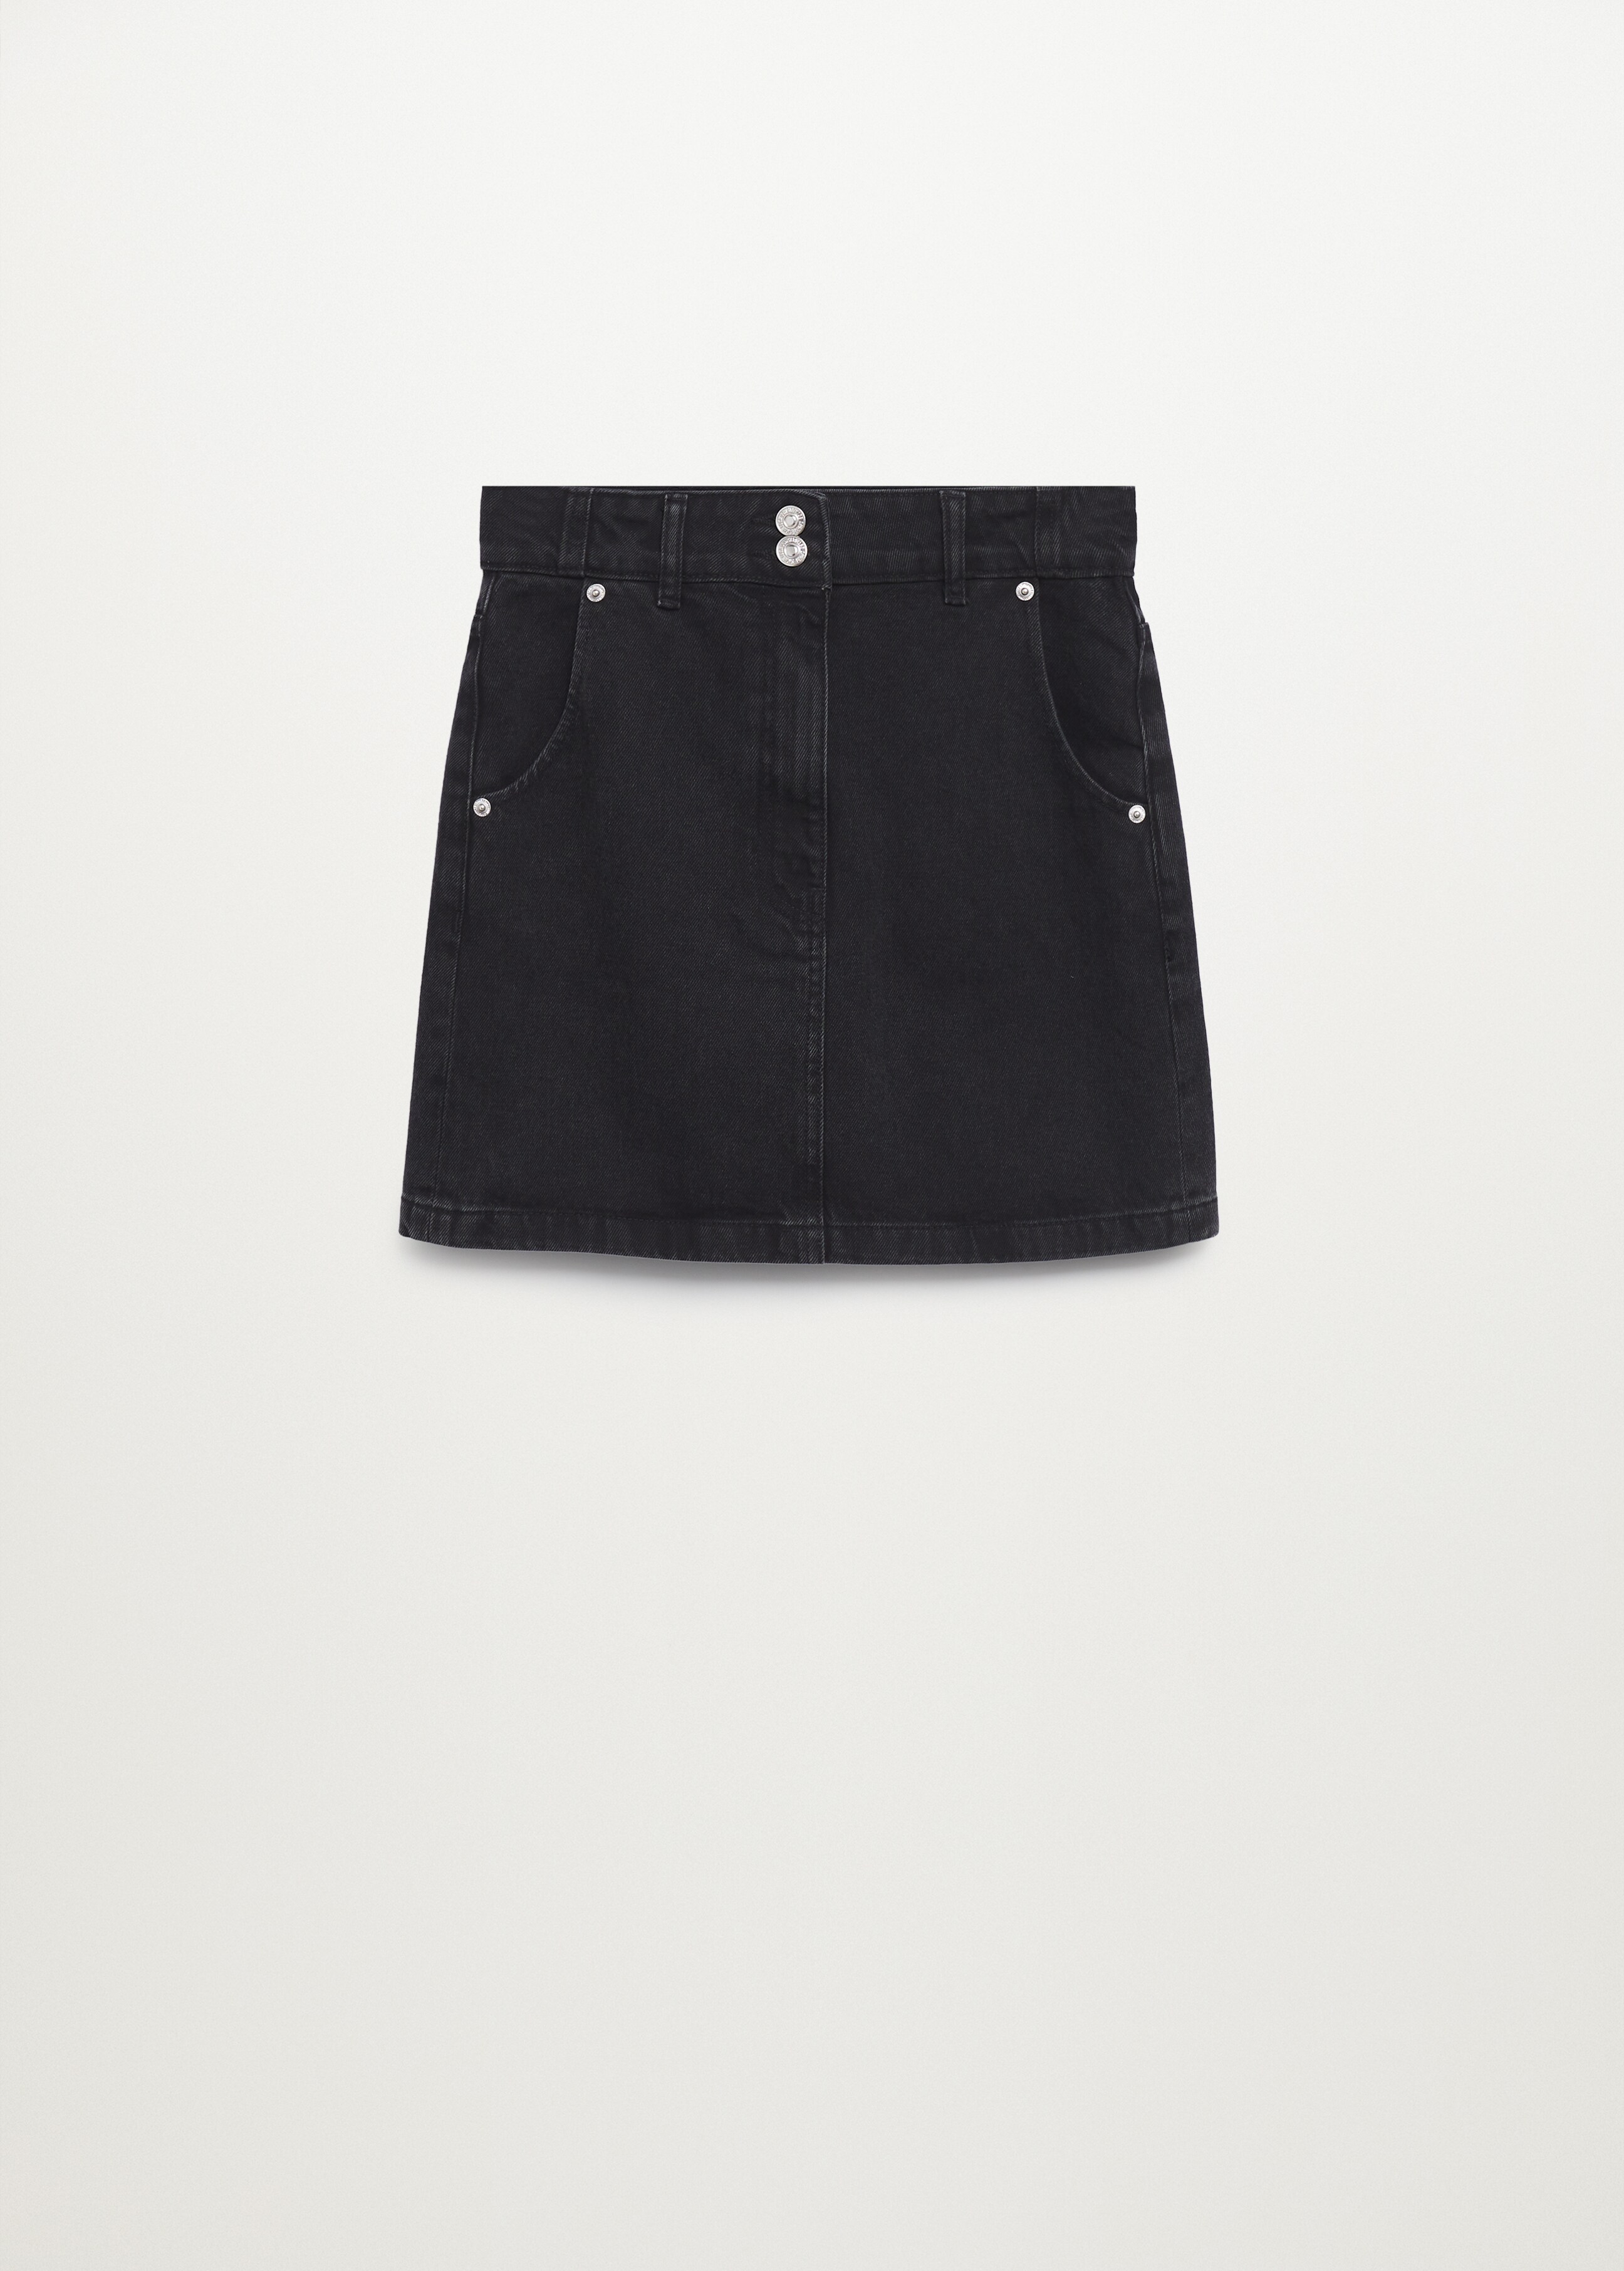 Minifalda denim bolsillos - Artículo sin modelo